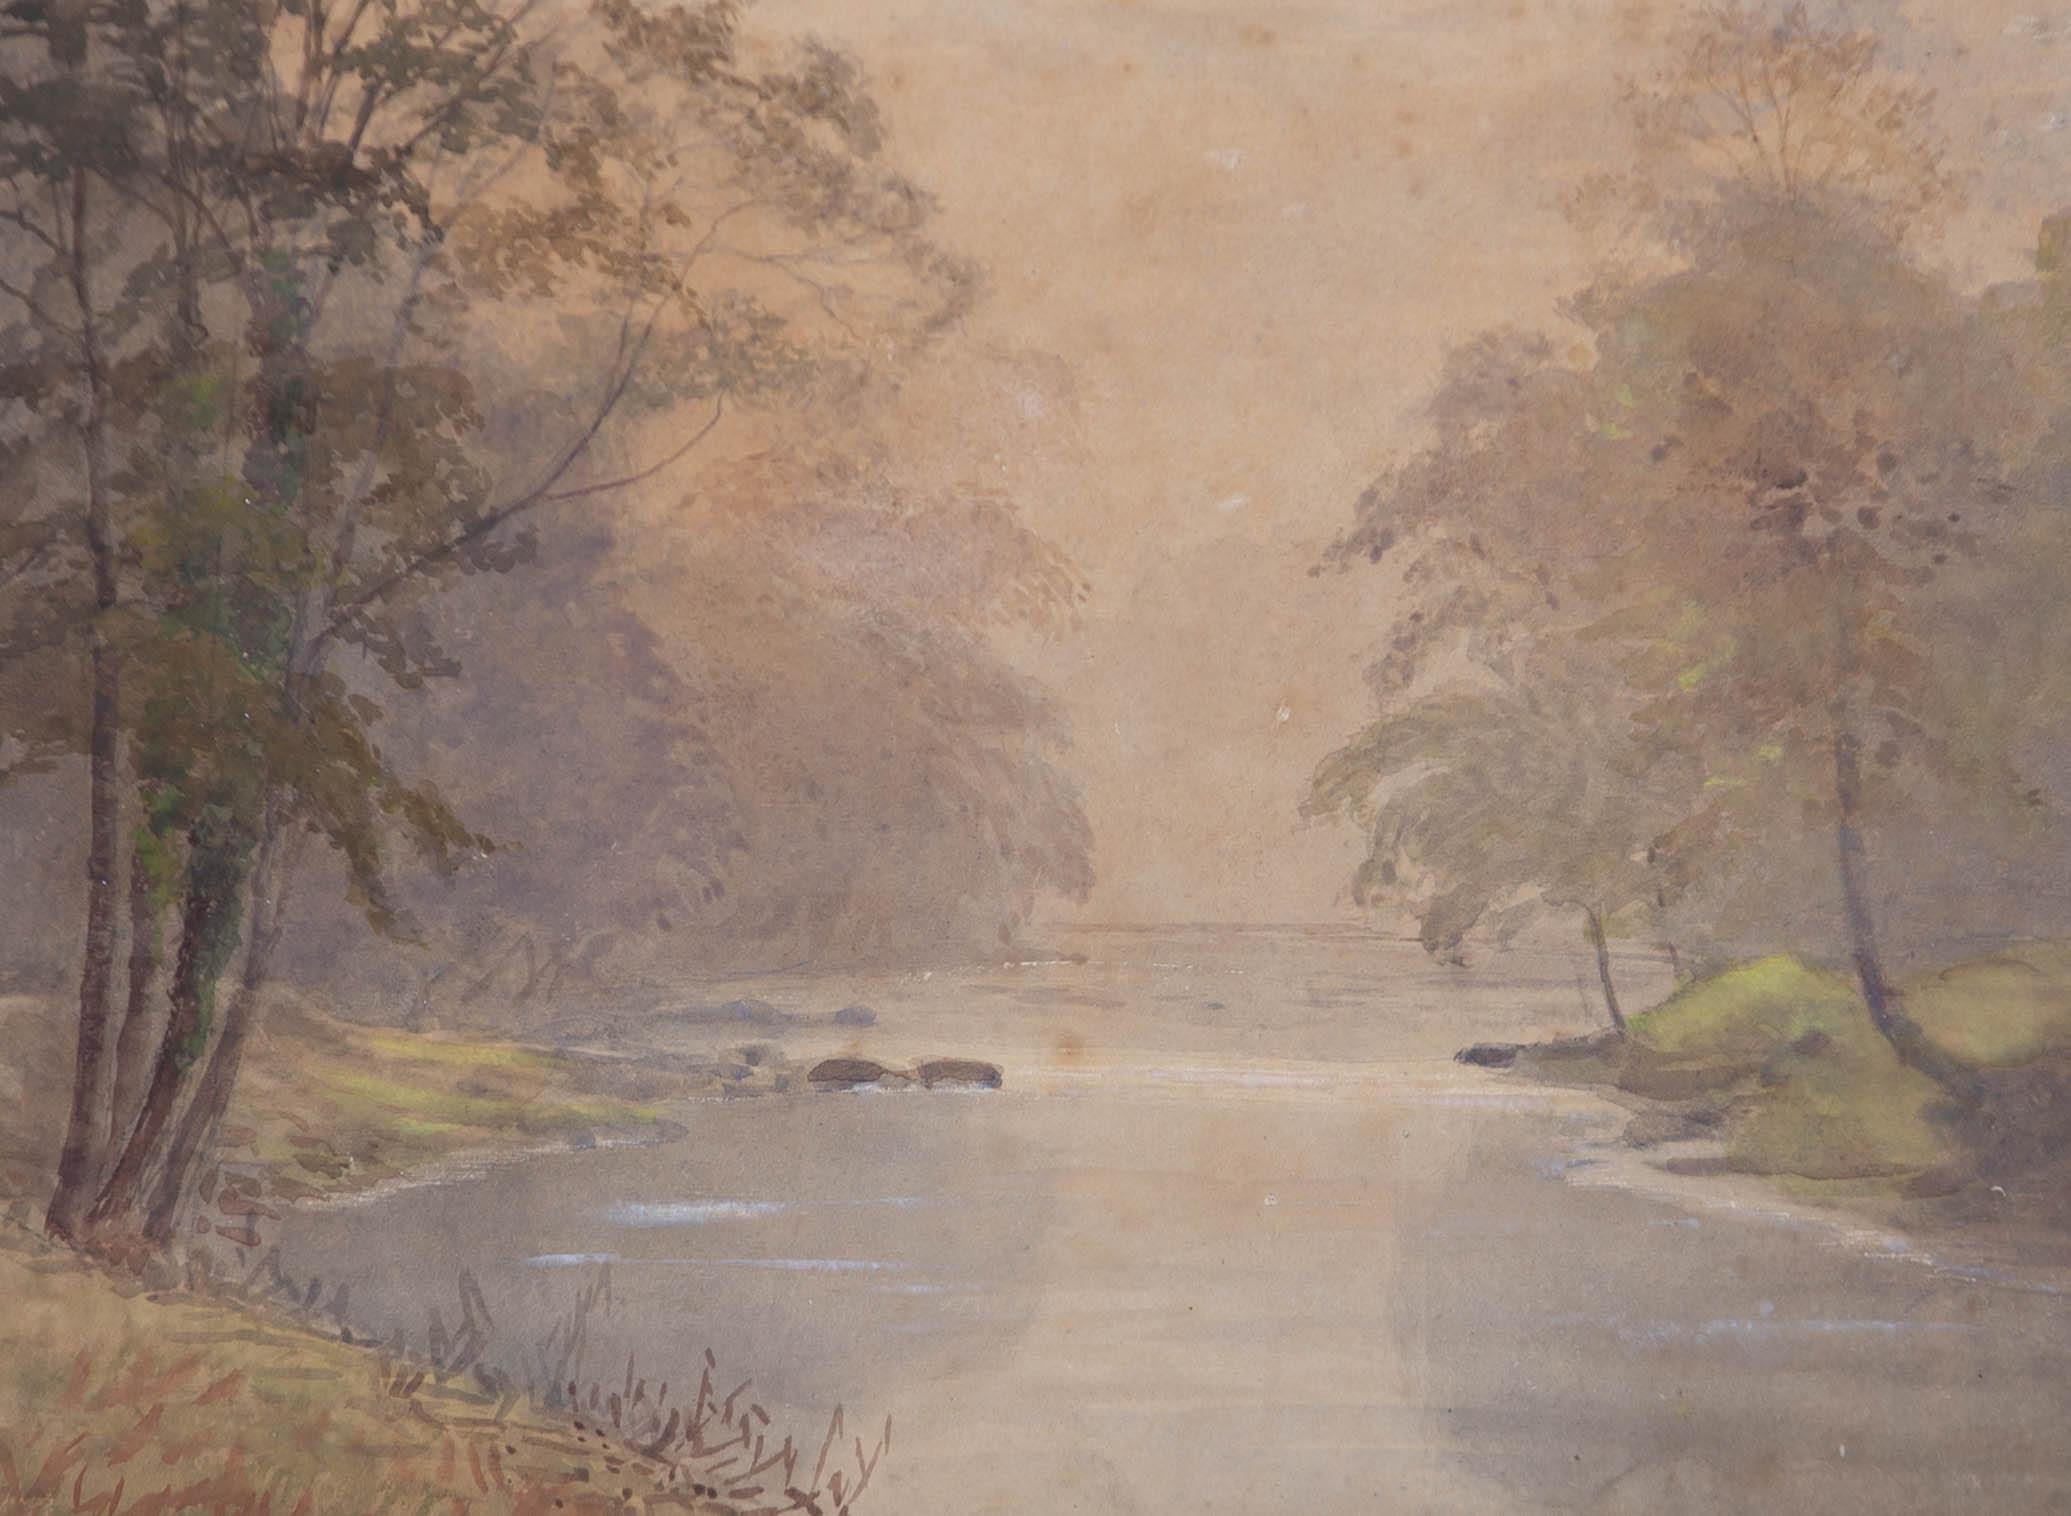 James Thomas Watts RBSA RCA LA (1849-1930) - 1879 Watercolour, Autumn River 1